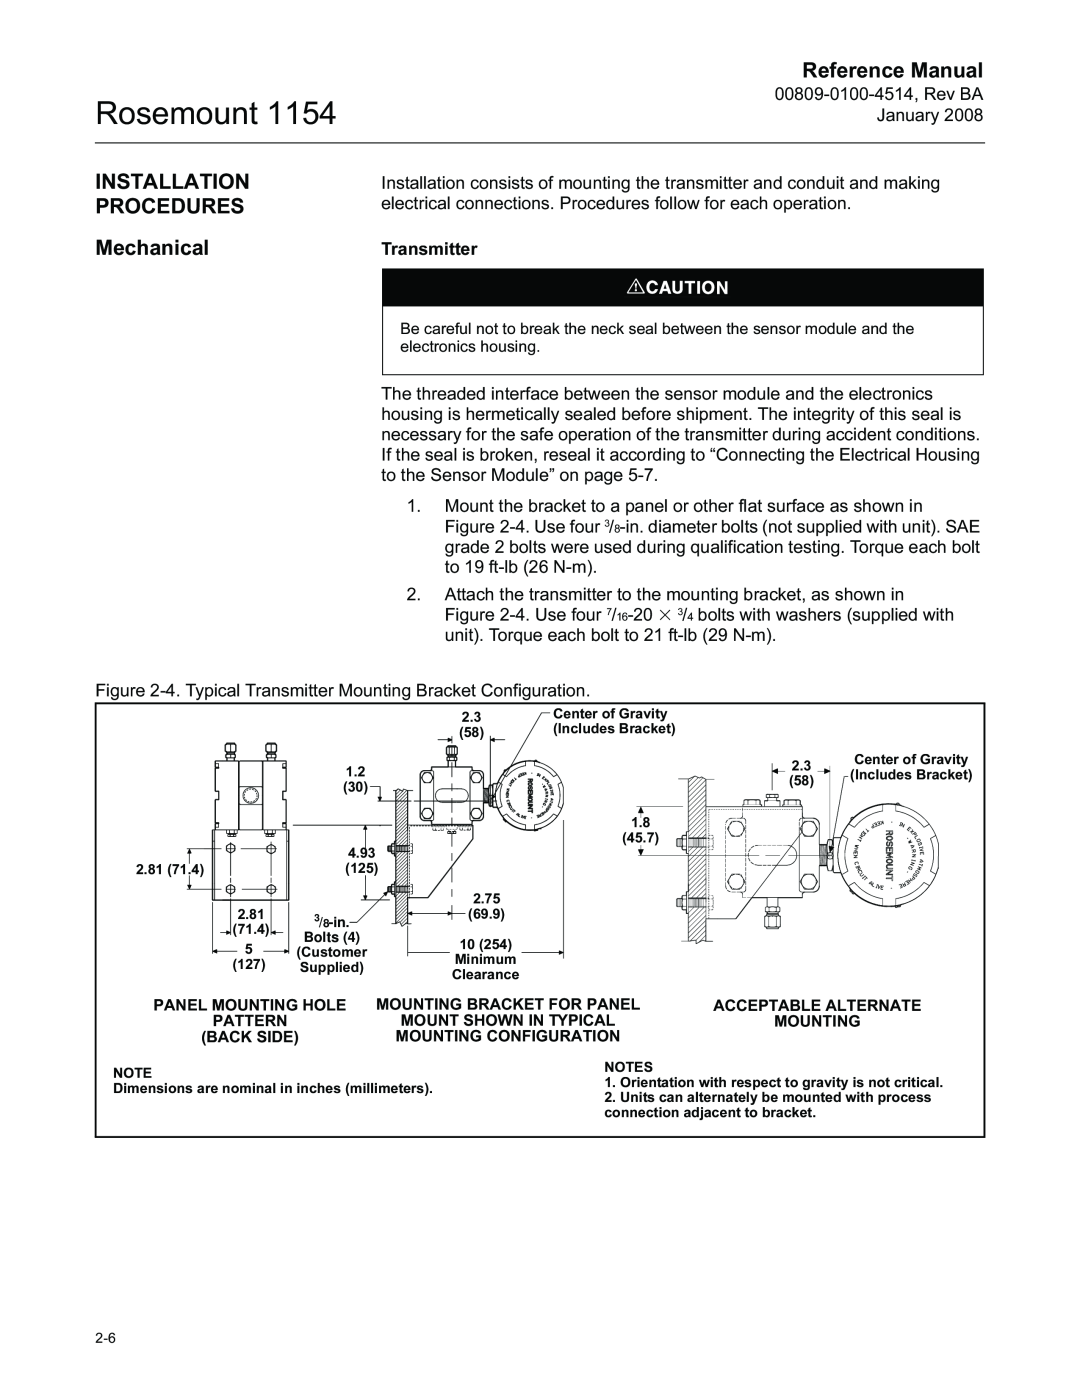 Emerson 00809-0100-4514, 1154 manual Installation, Procedures, Mechanical, Rosemount, Reference Manual 